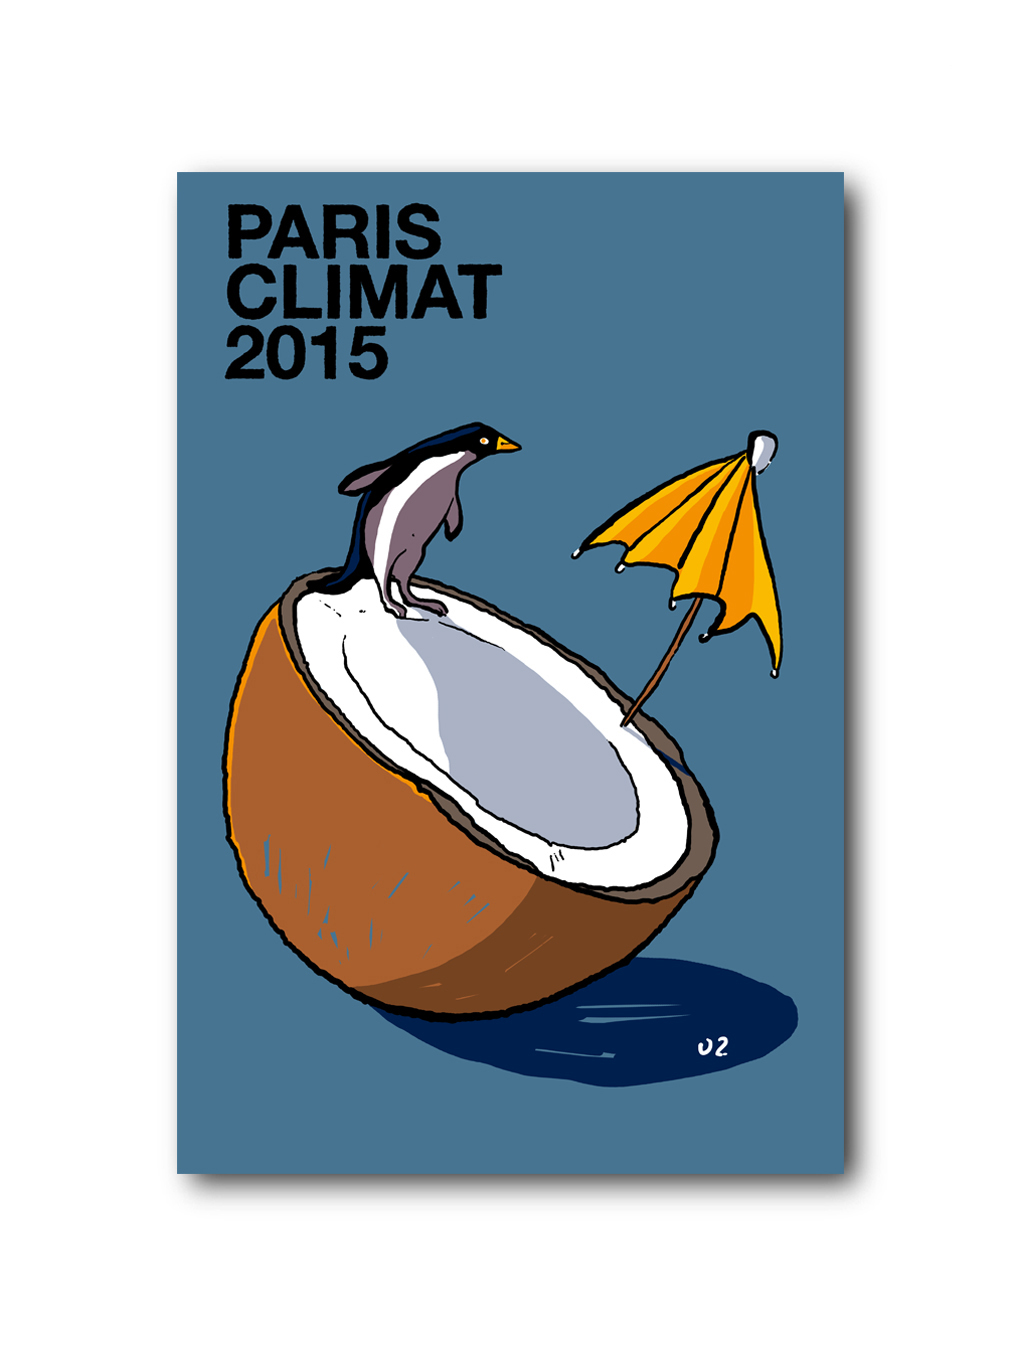 Paris climat climate global warming pingoin girafe giraffe funny Event ecologic summit poster